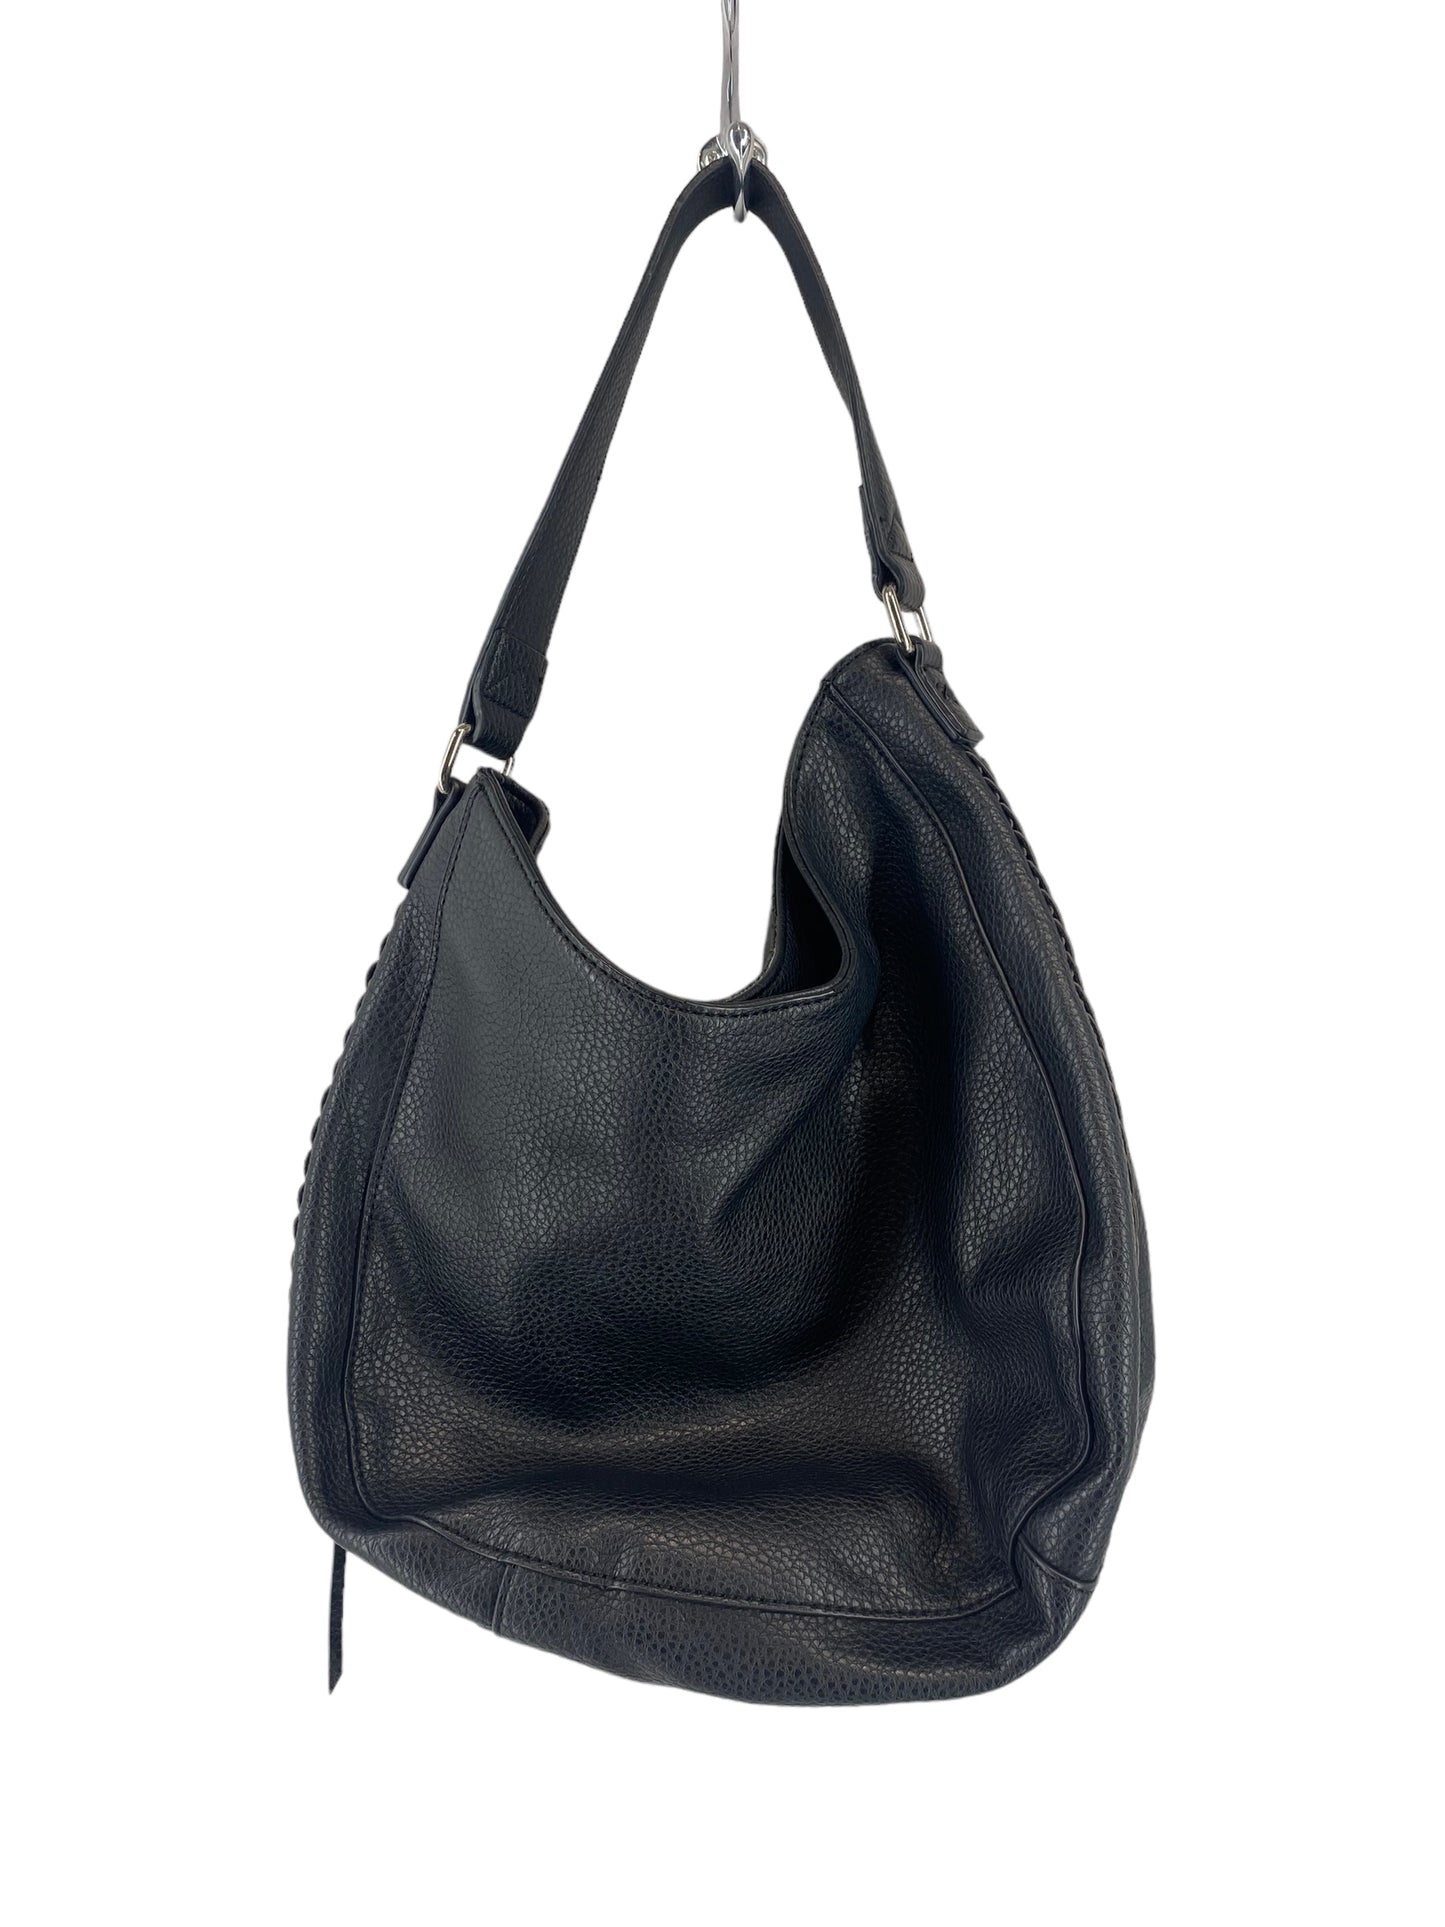 Handbag By Liz Claiborne  Size: Large